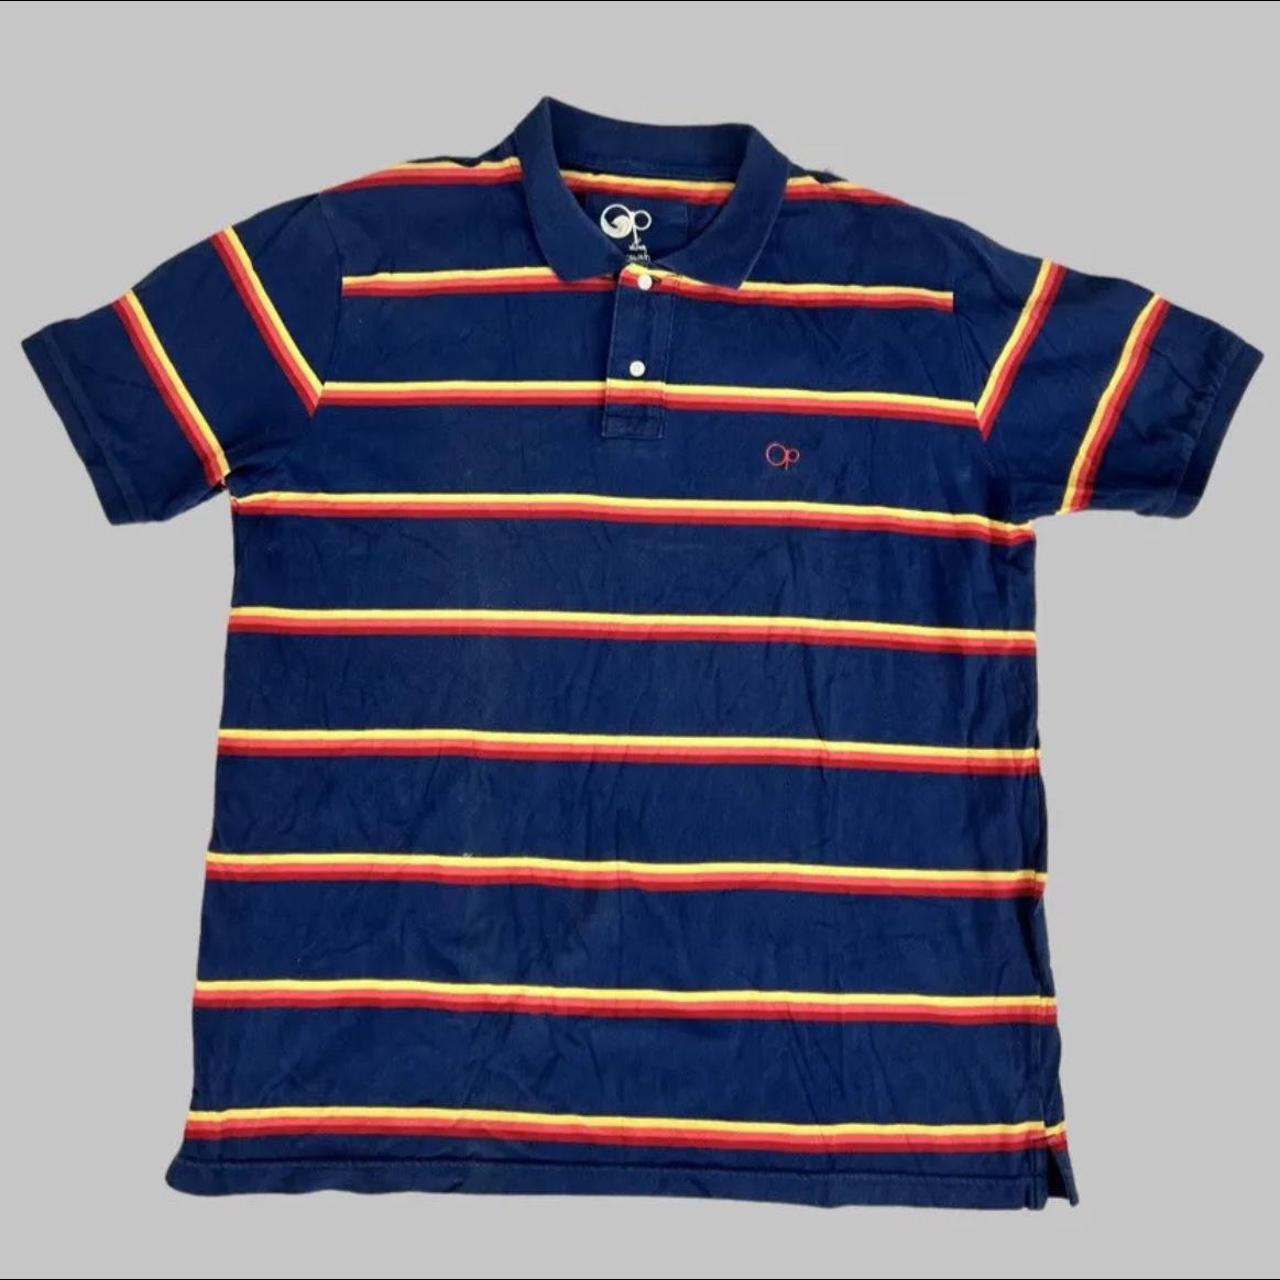 Vintage OP Ocean Pacific Rainbow Striped Polo Shirt